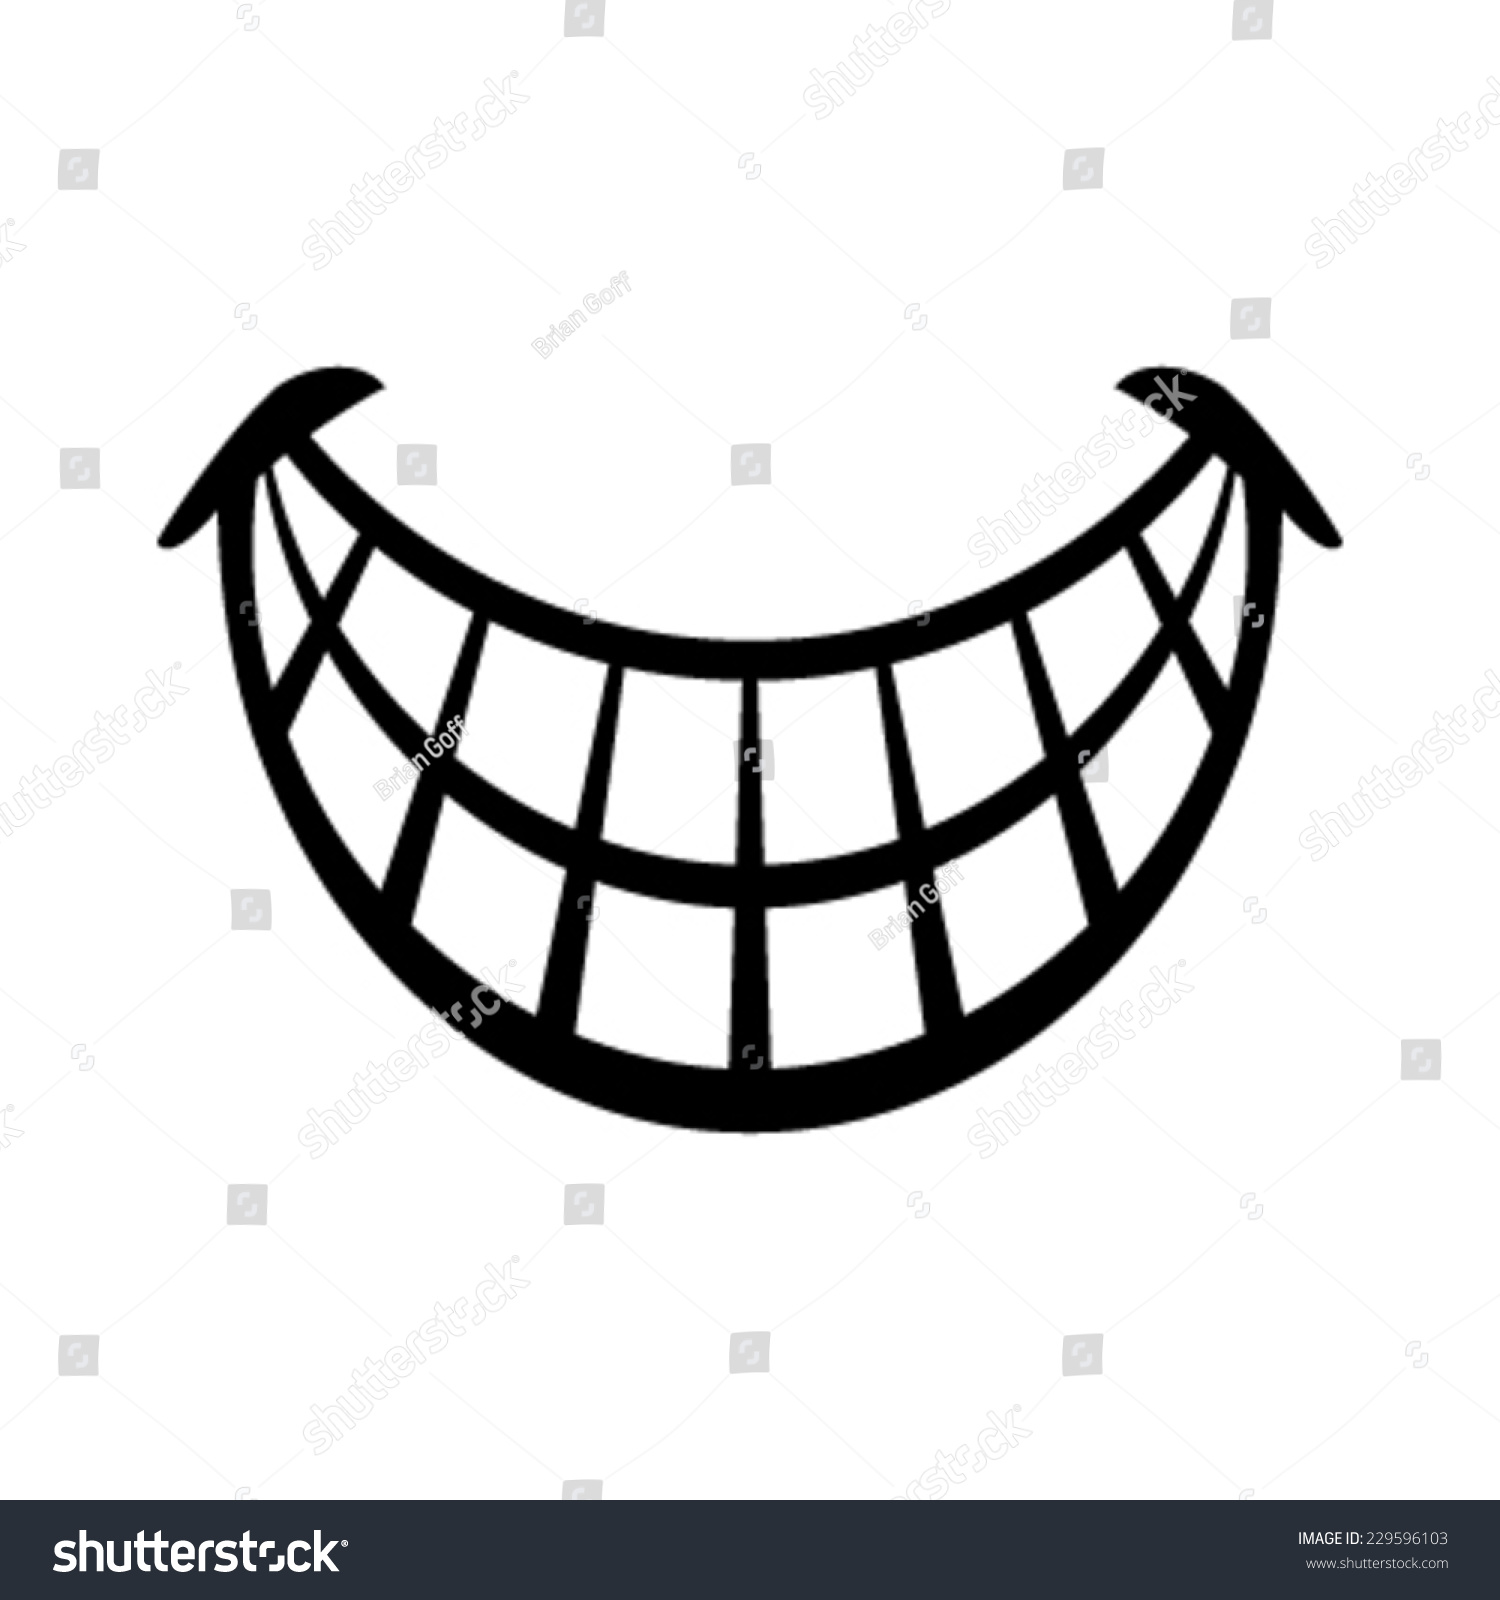 smile logo clipart - photo #43